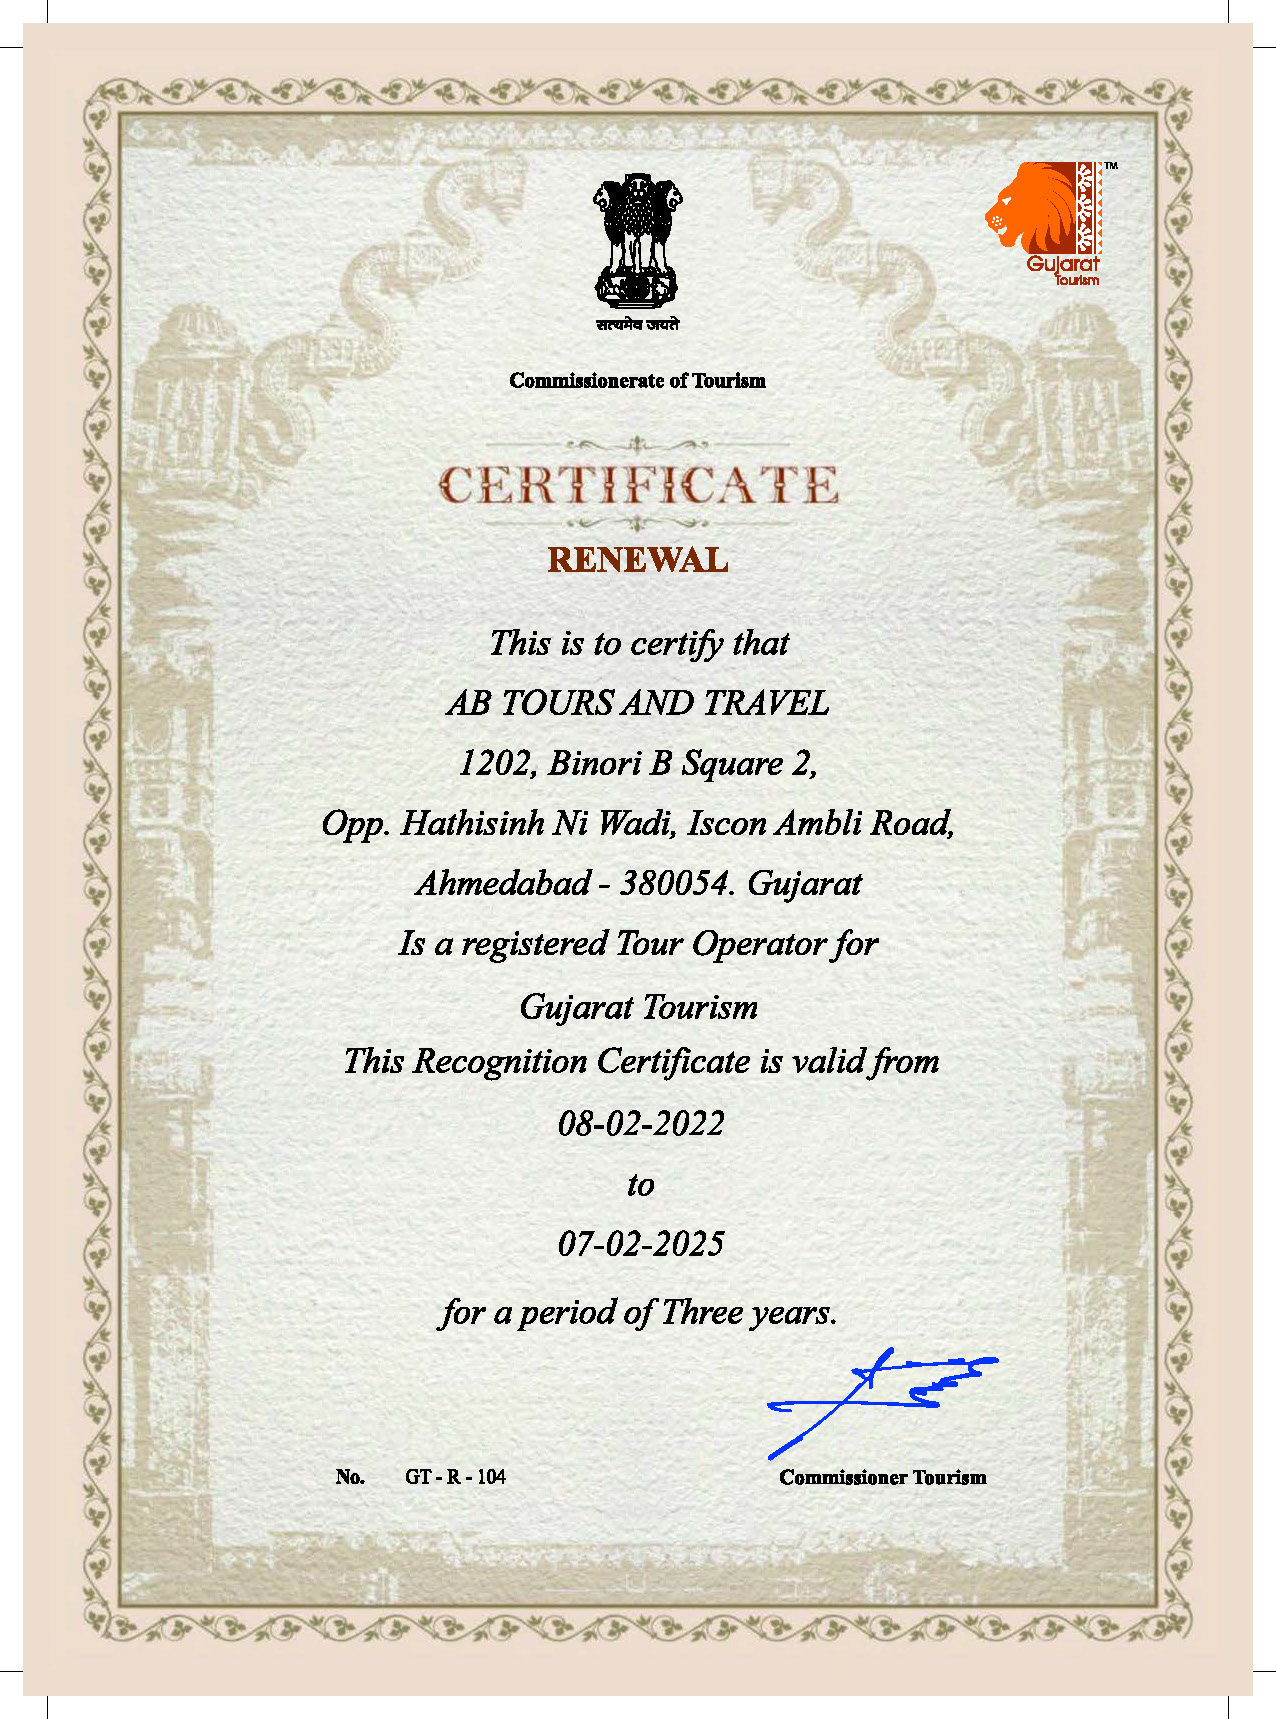 Gujarat Tourism Certificate New.jpg